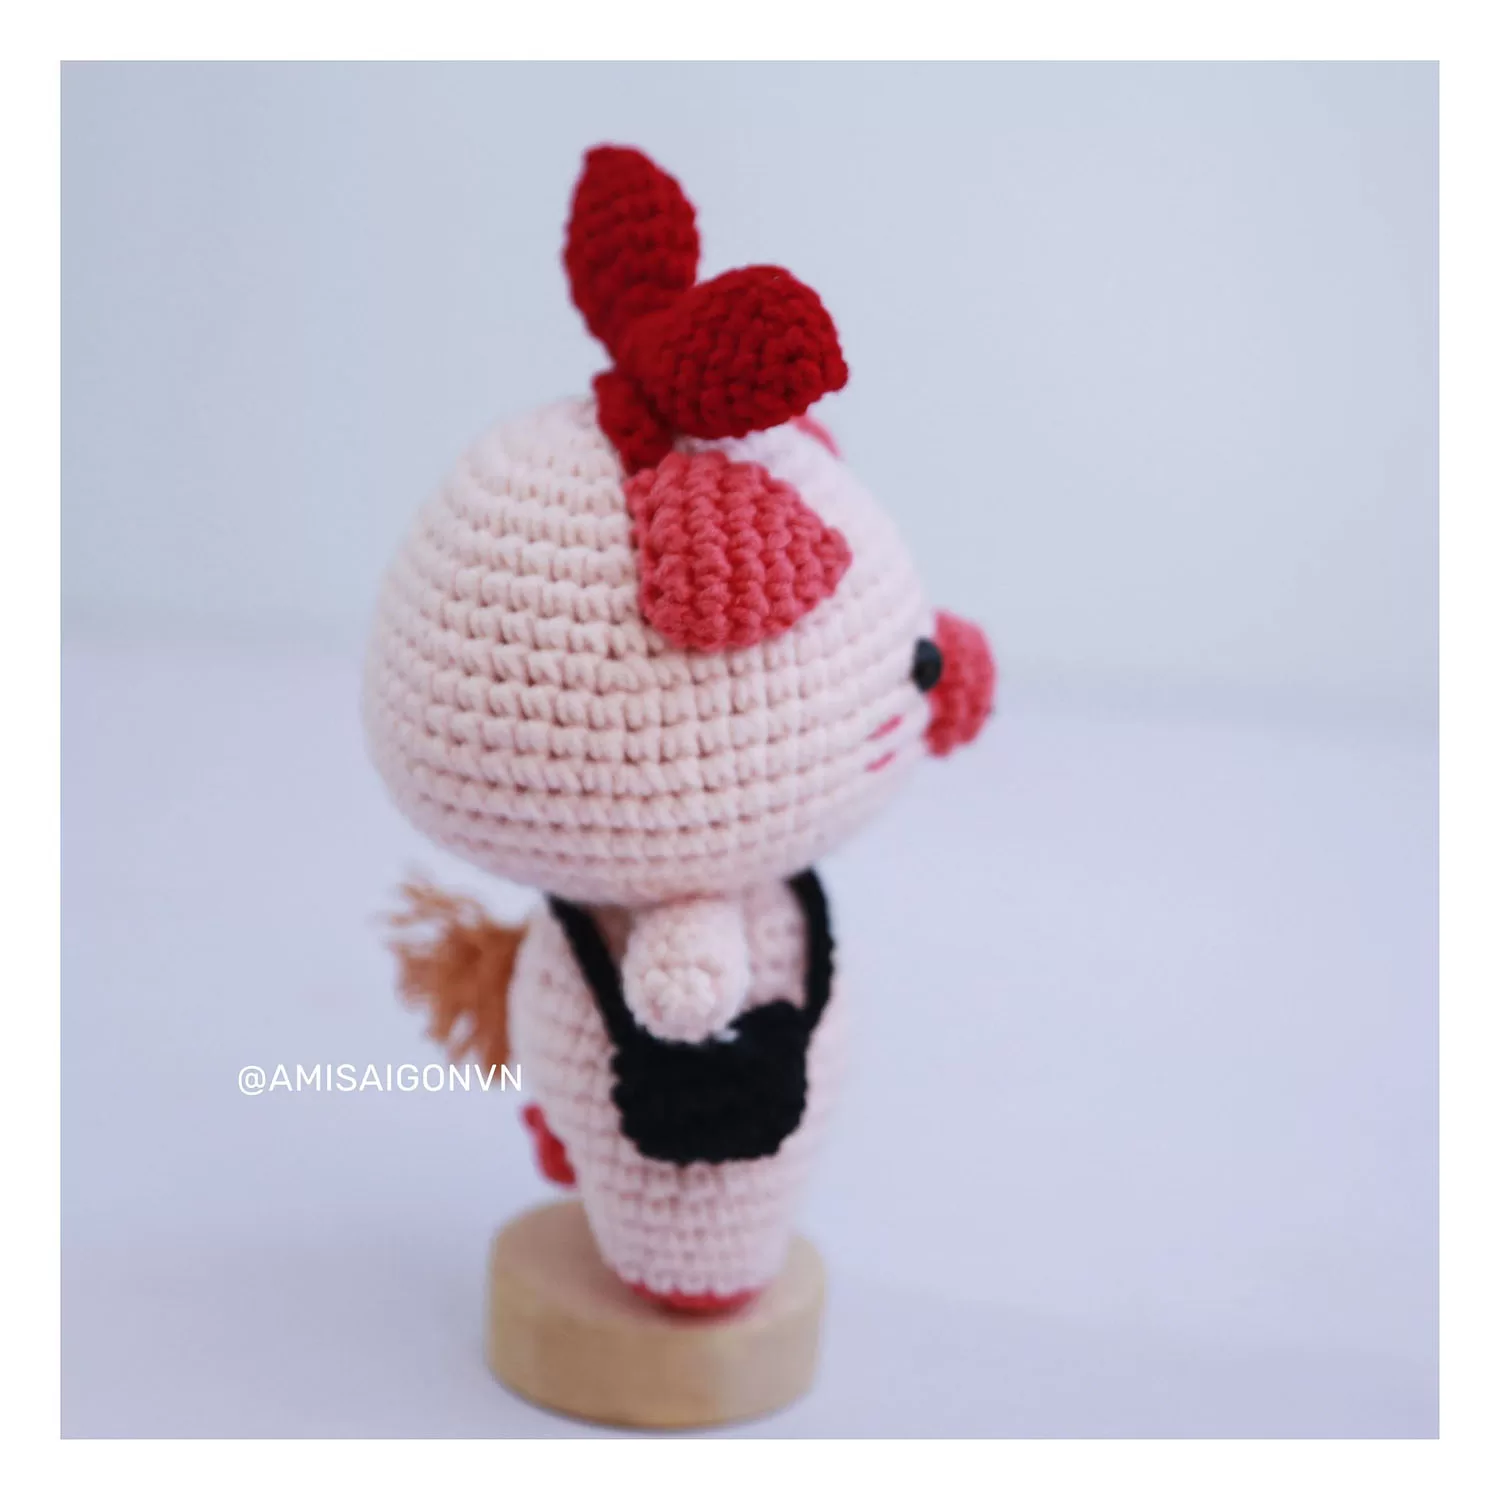 Pig Girl Amigurumi | Crochet Pattern | Amigurumi Tutorial PDF in English | AmiSaigon